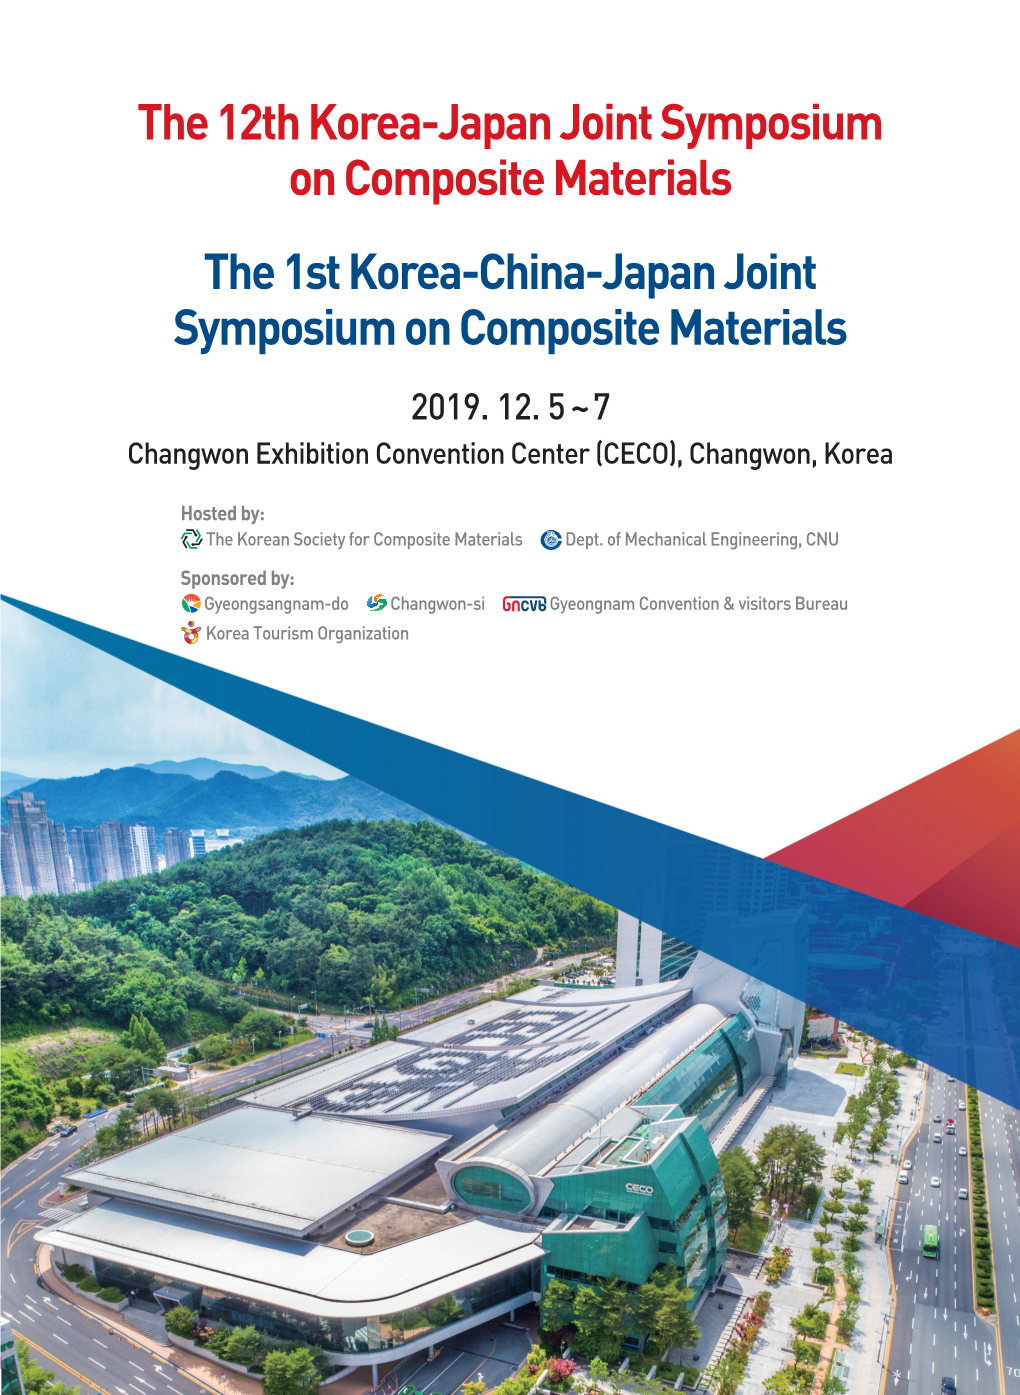 The 12Th Korea-Japan Joint Symposium on Composite Materials the 1St Korea-China-Japan Joint Symposium on Composite Materials 2019